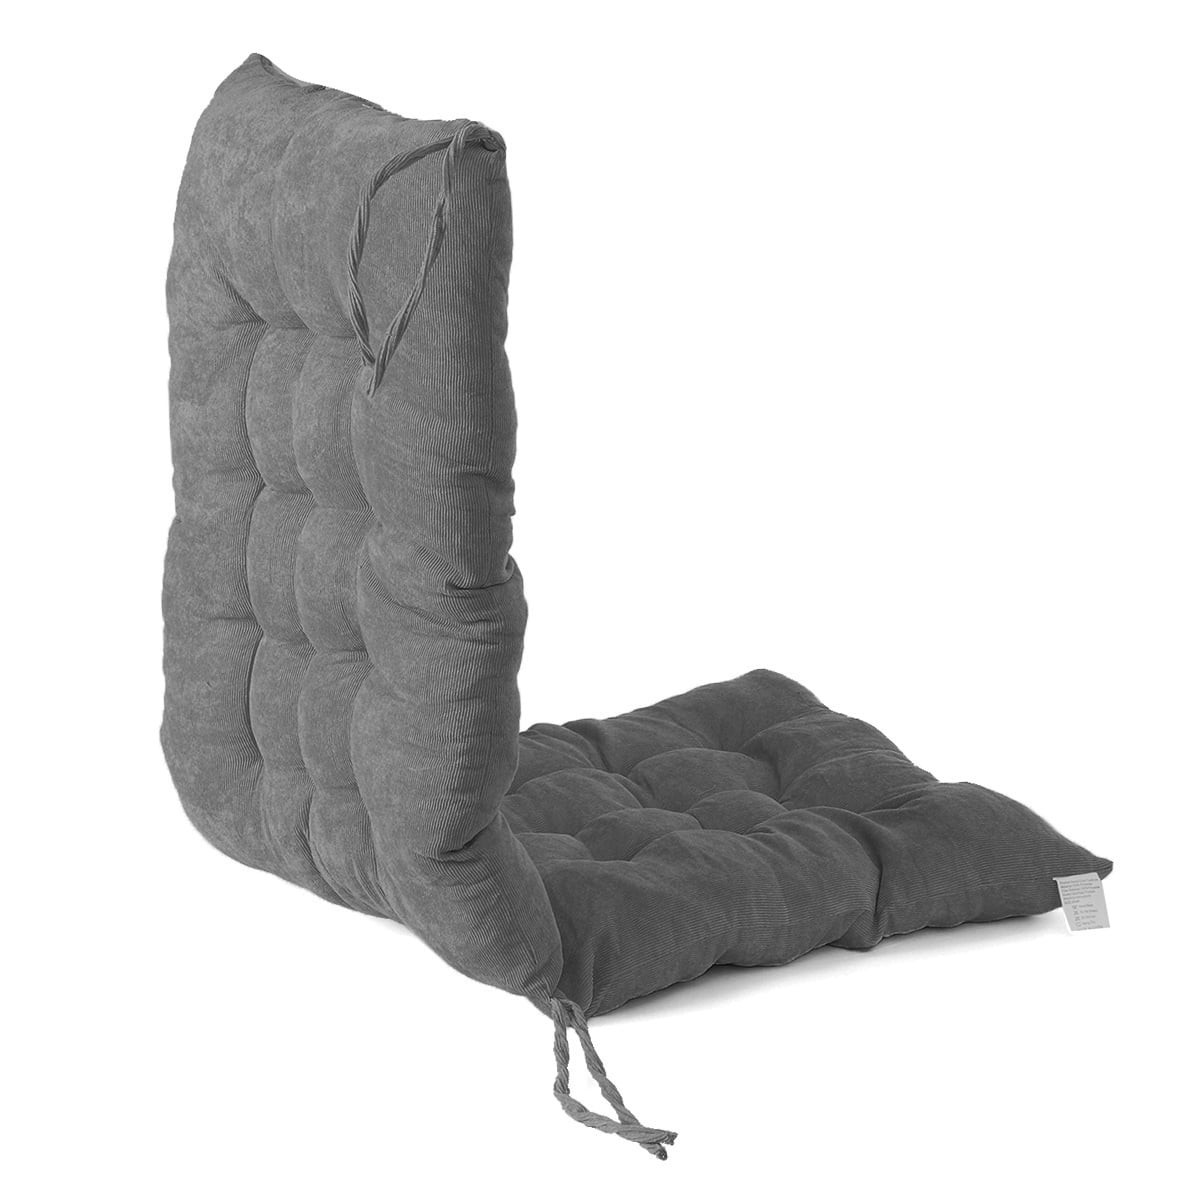  CHAOMIC Seat Cushion for Desk Chair Cushions,Rocking